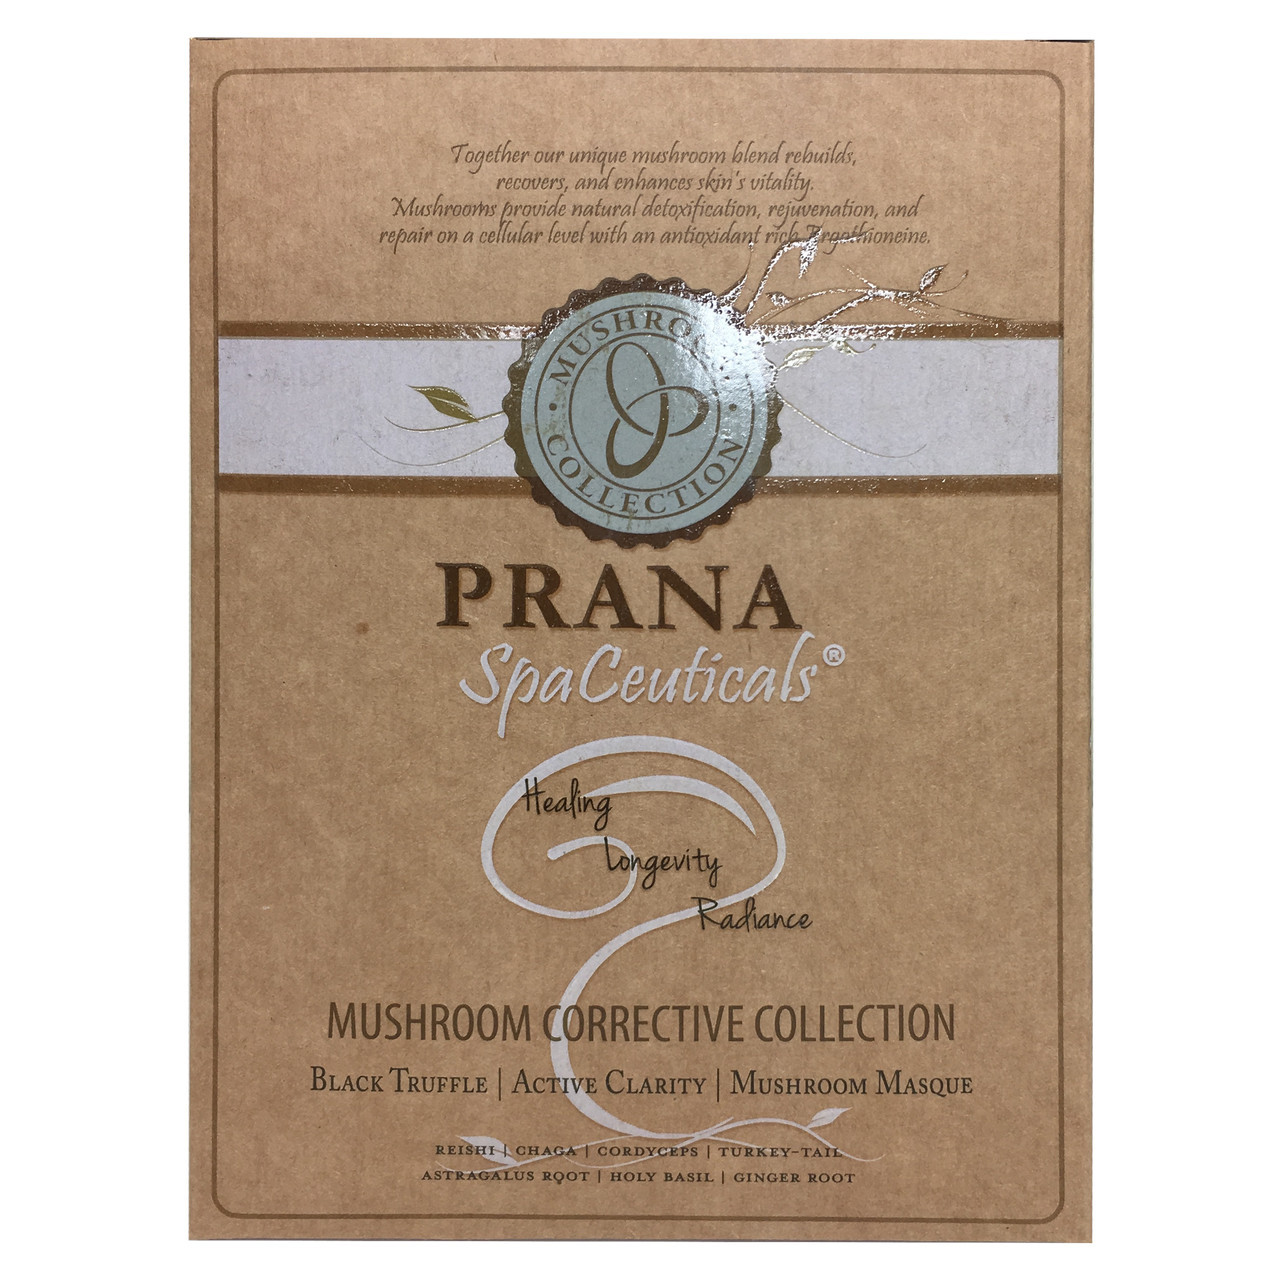 Prana SpaCeuticals Mushroom Collection Corrective Kit